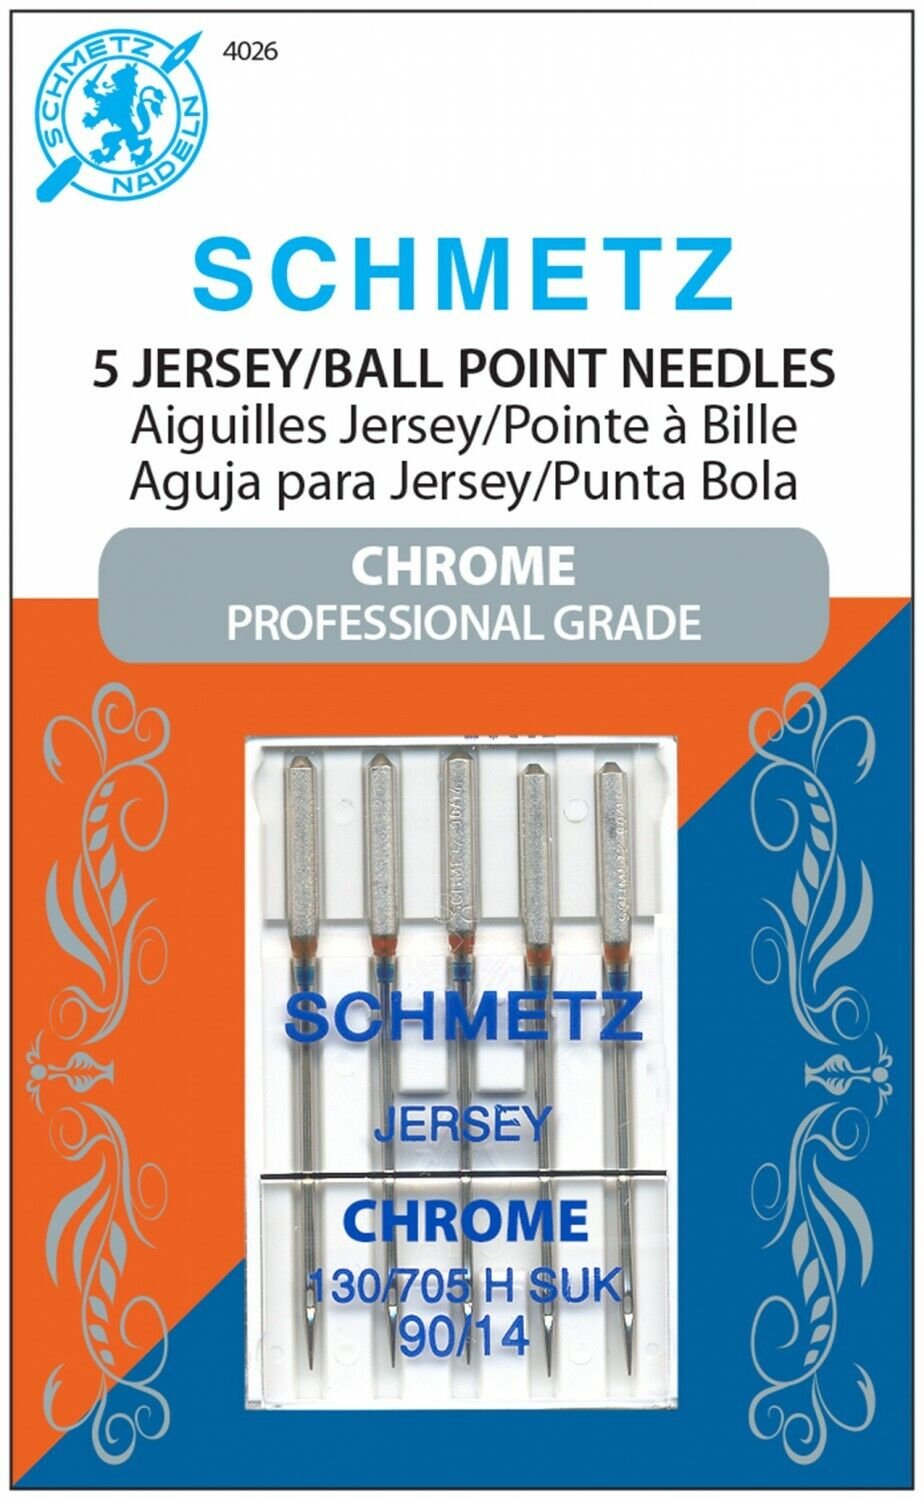 Jersey/Ball Point Needles 5 Needles; chrome professional grade